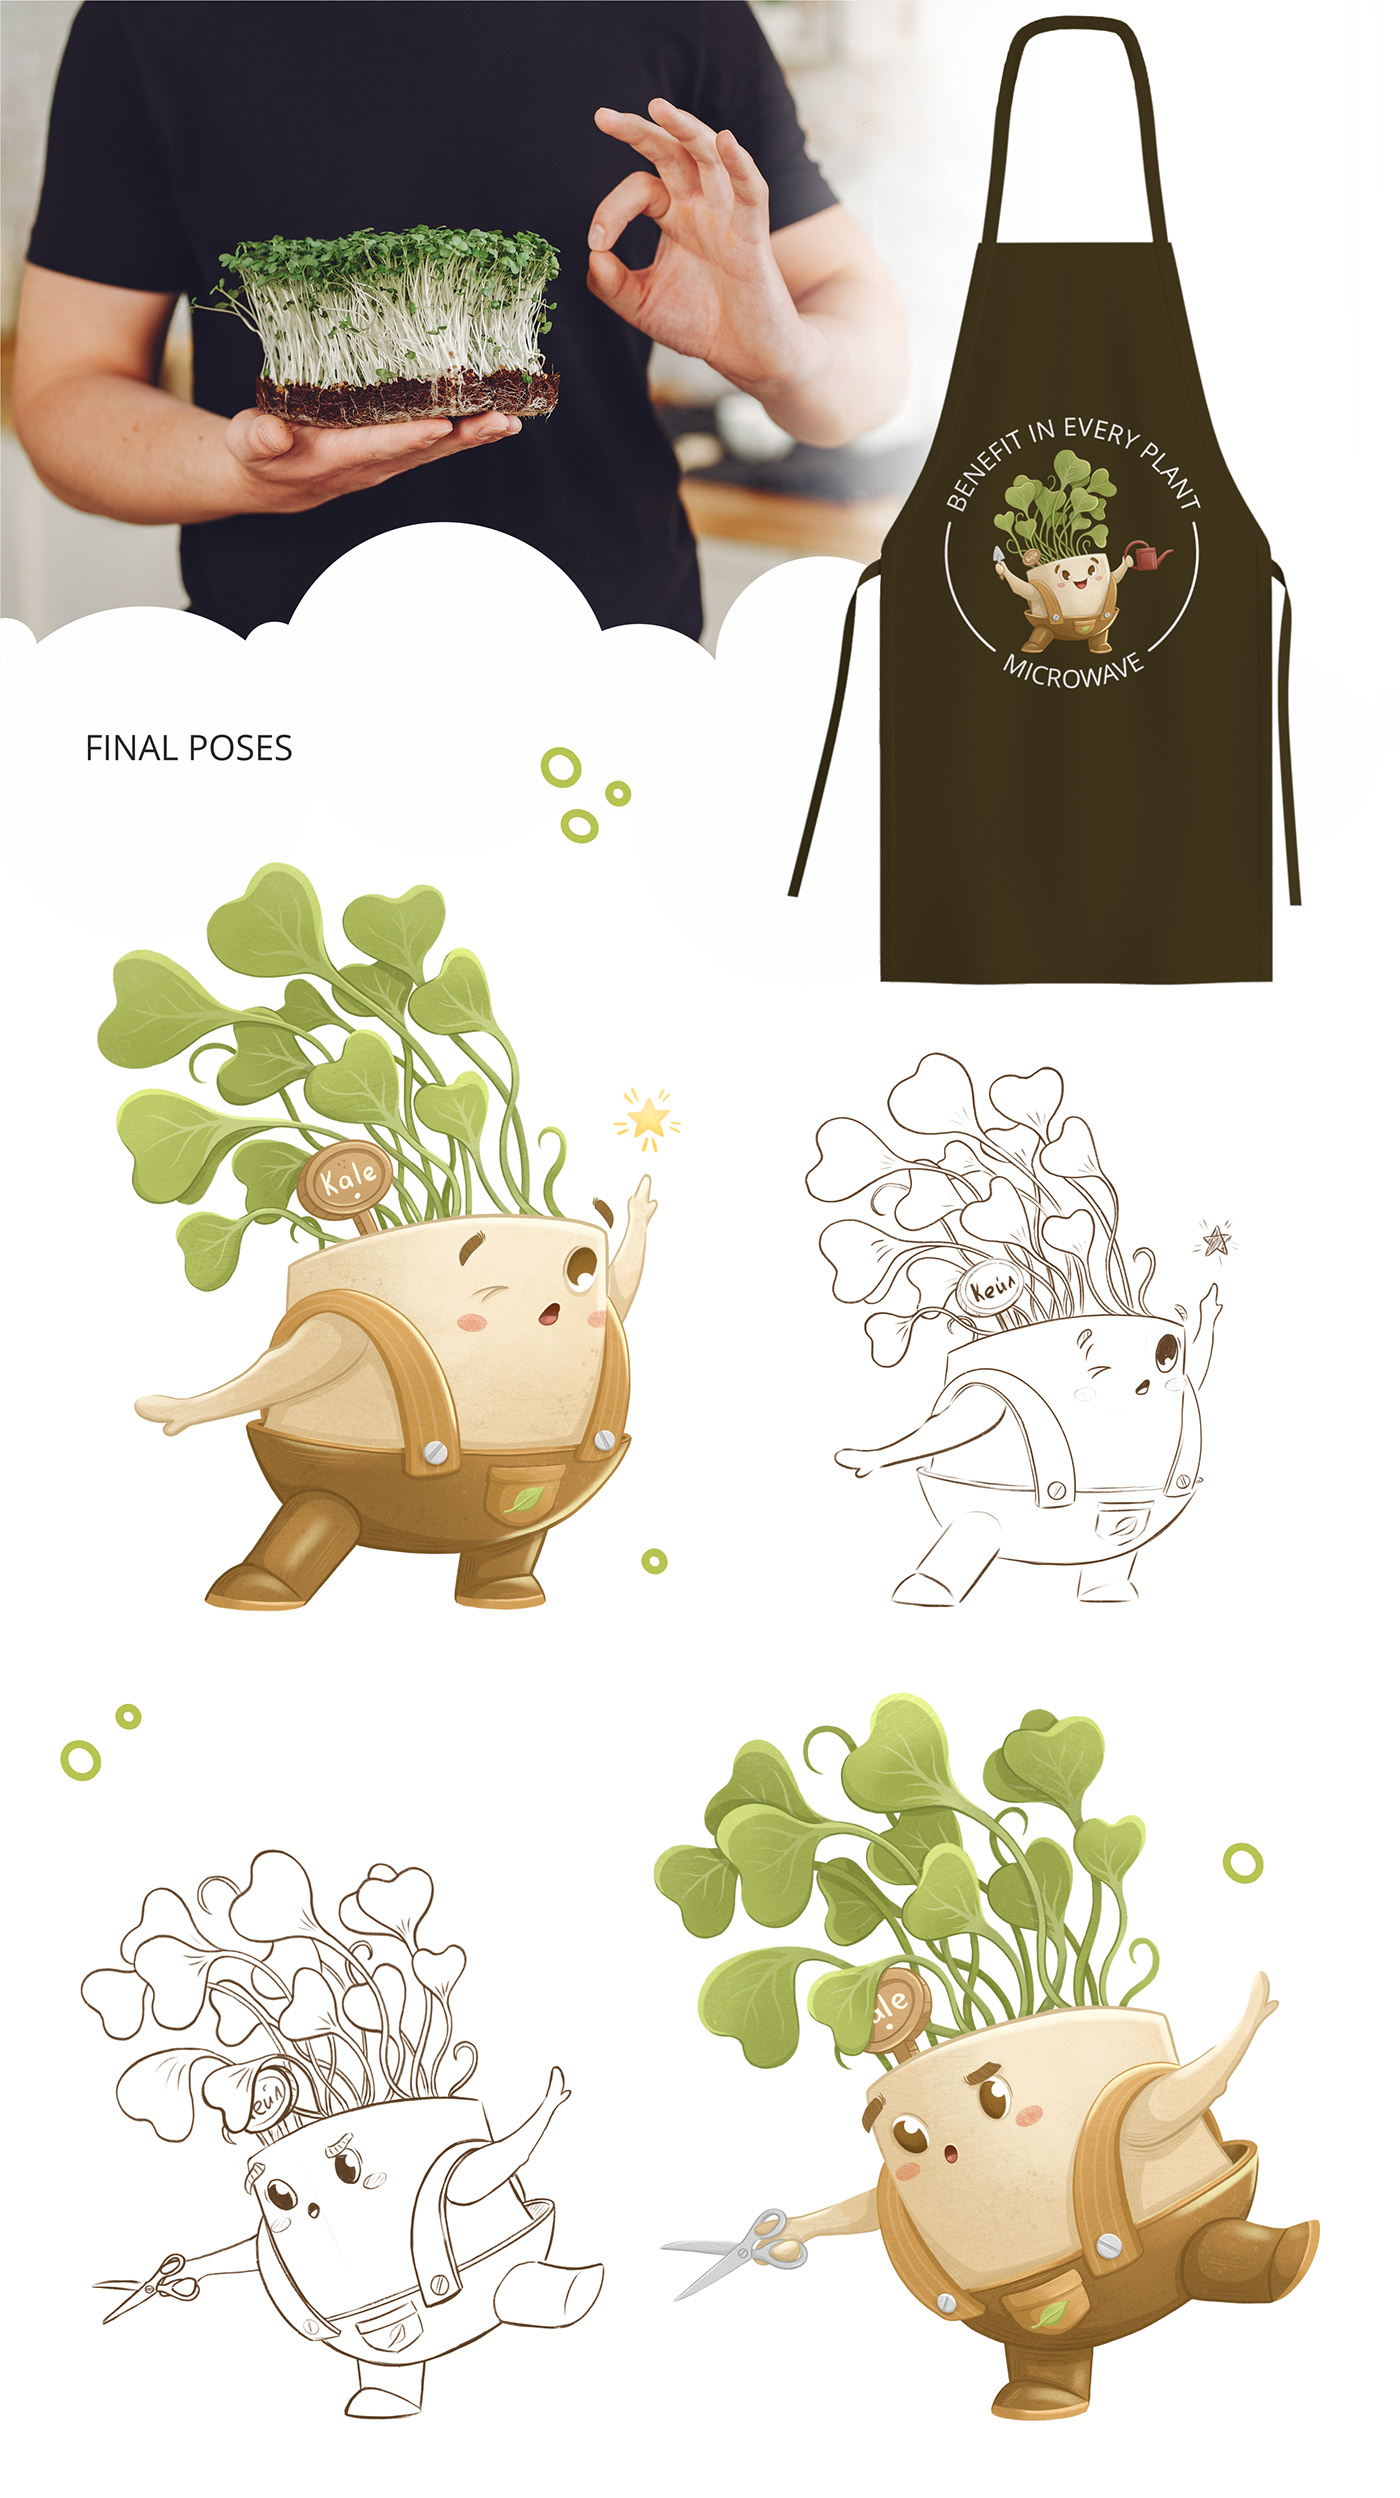 Mascot illustrations, character brand design microgreens